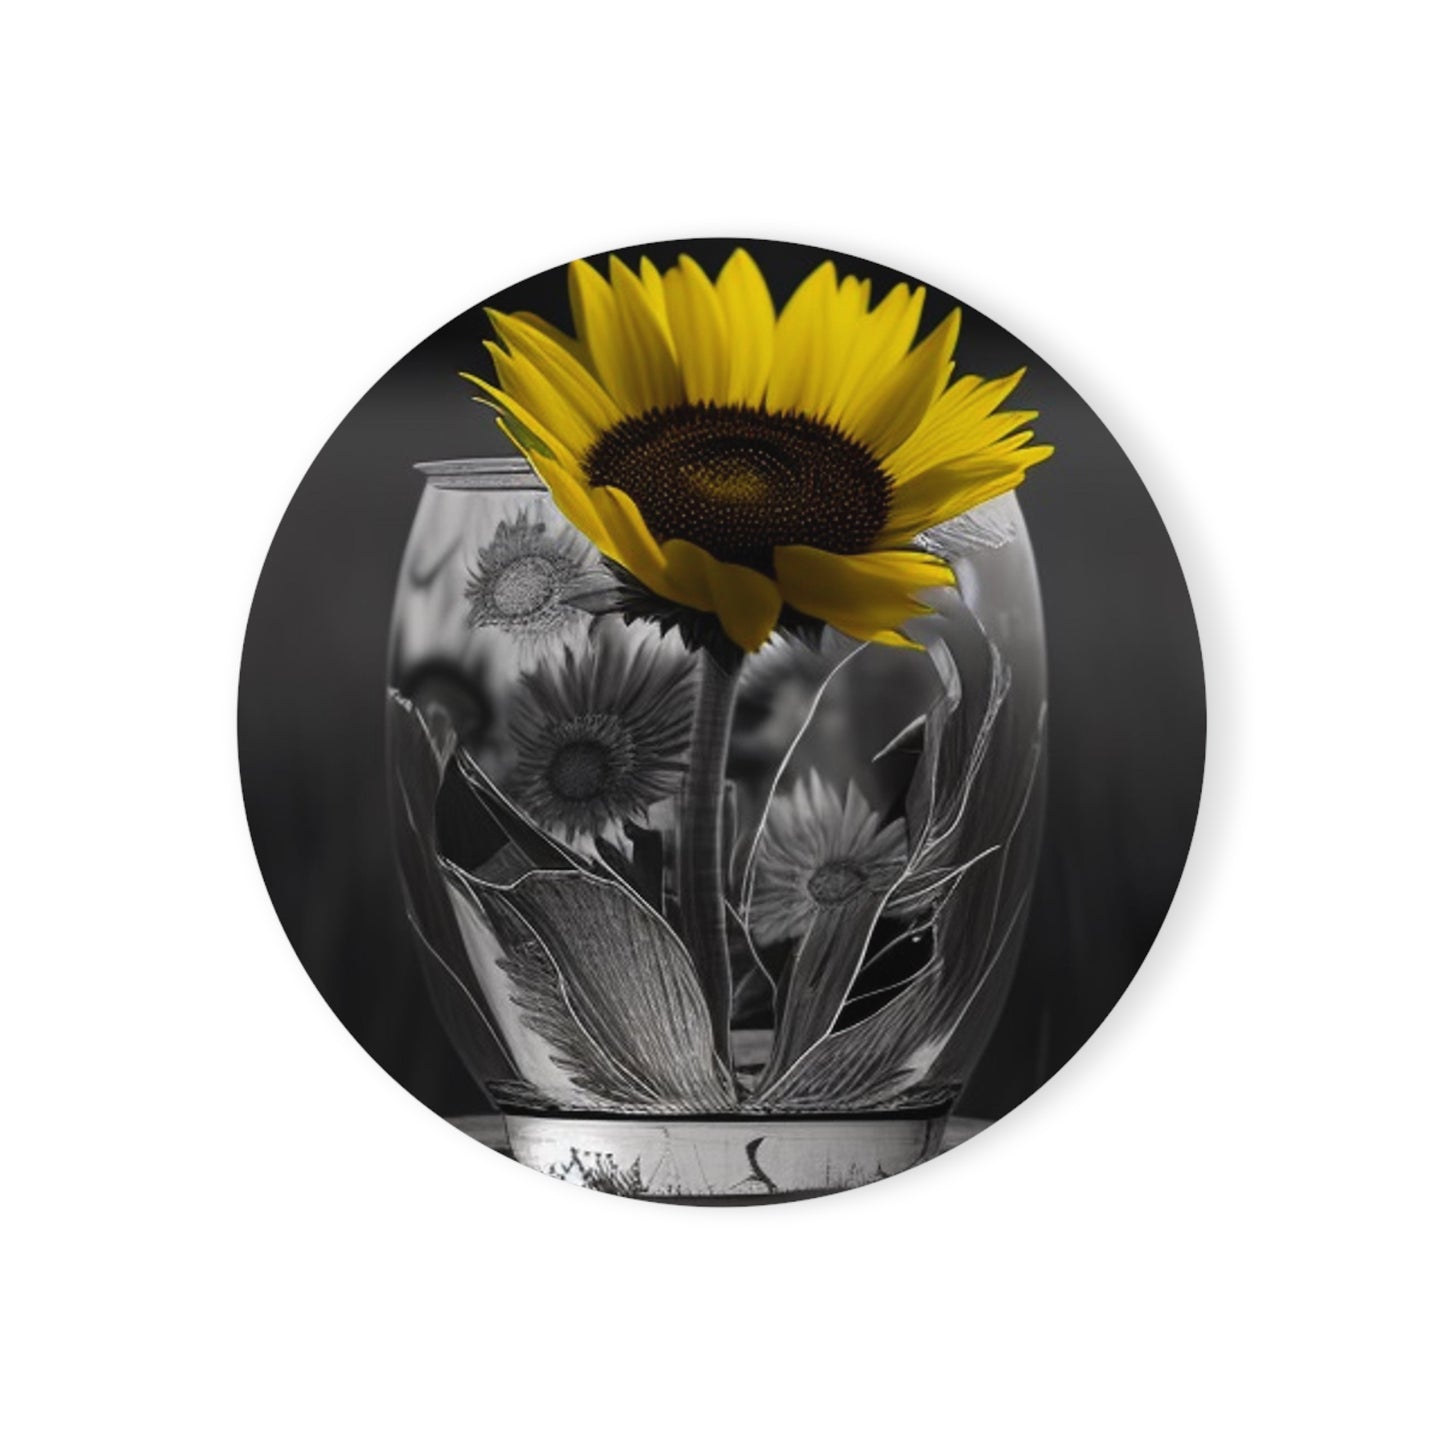 Cork Back Coaster Yellw Sunflower in a vase 1